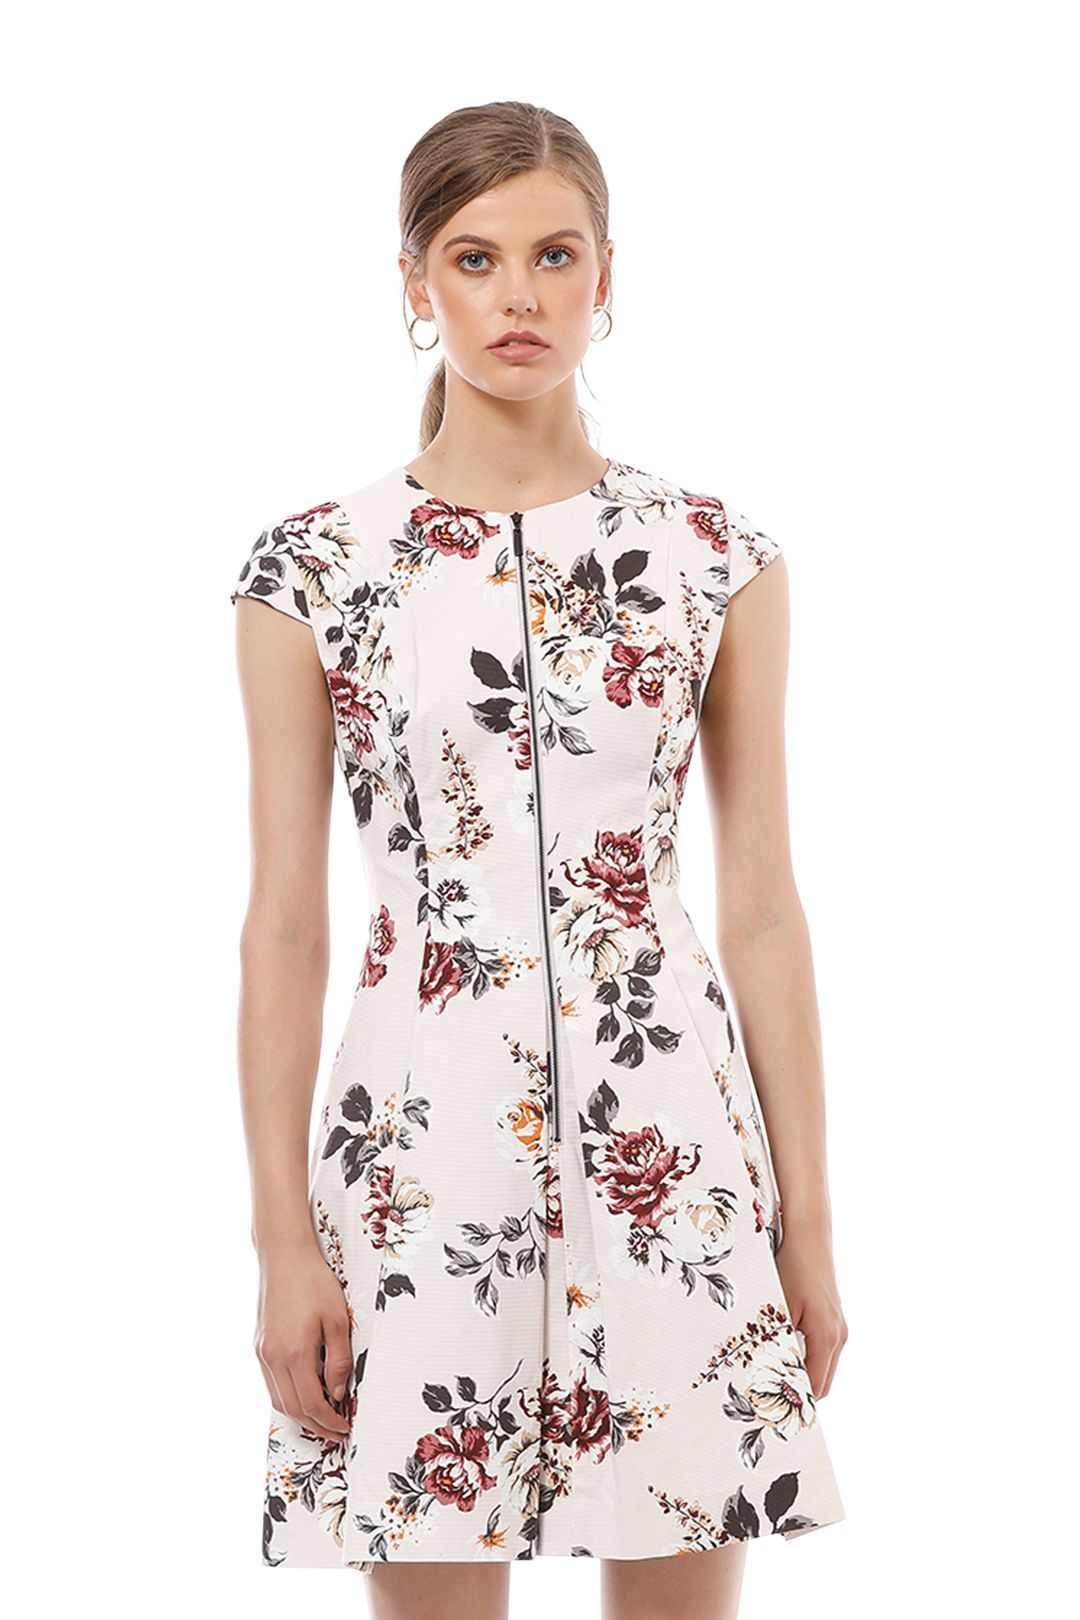 Cue - Floral Ottoman Zip Front Dress - Cream Floral - Close Up